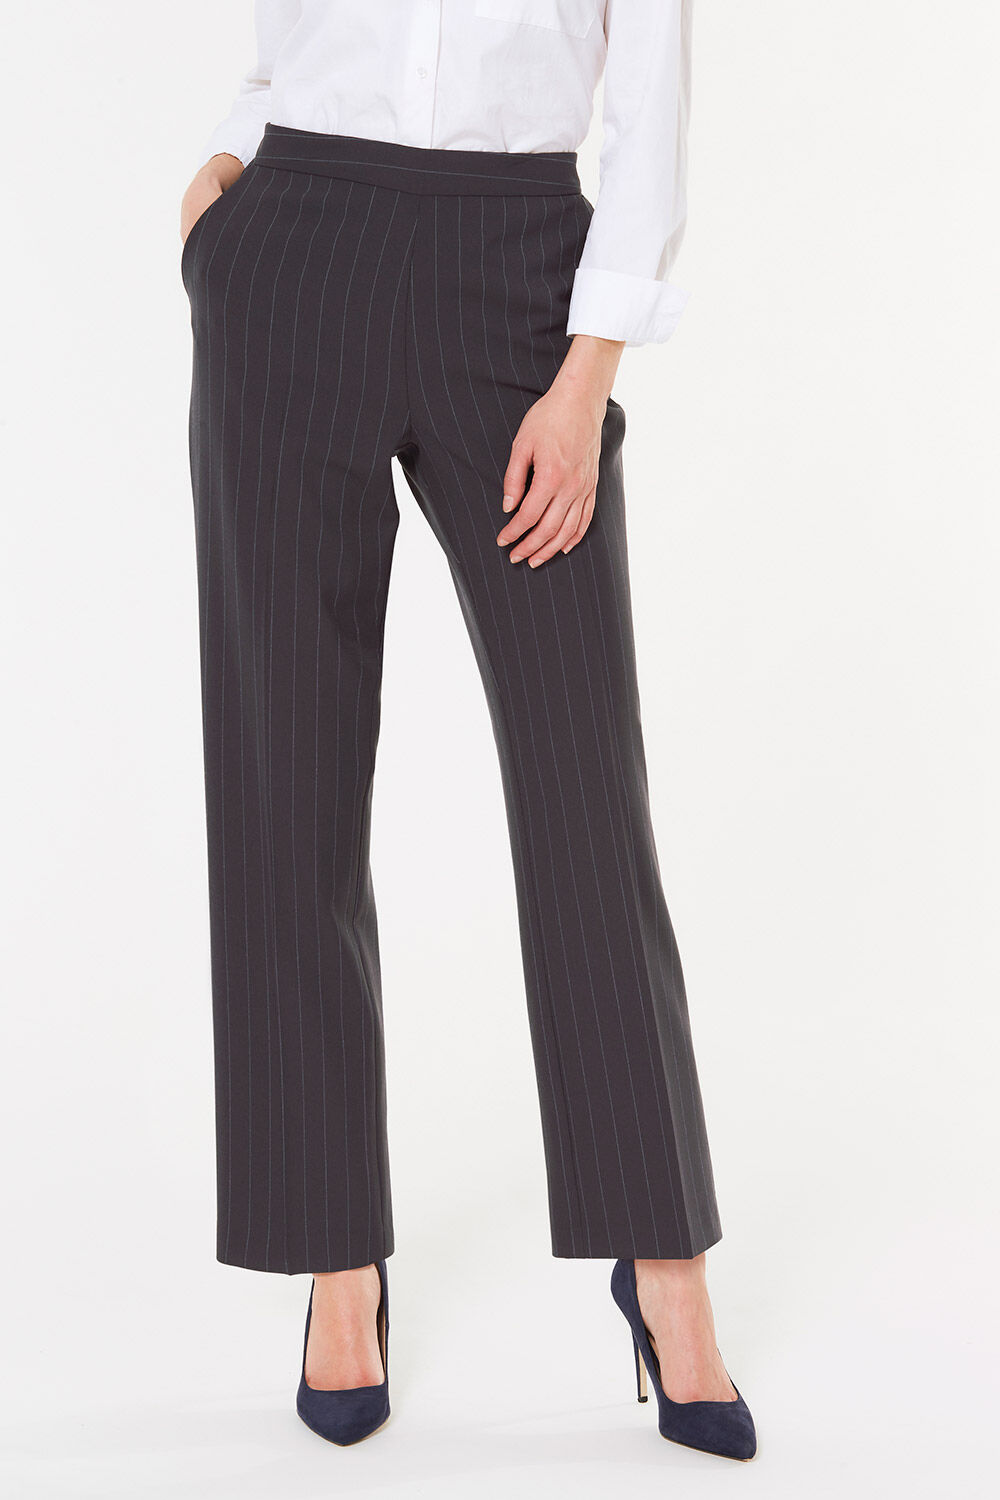 Bonmarche Workwear Classic Straight Leg Stripe Pull On Trouser - Navy, Size: 12